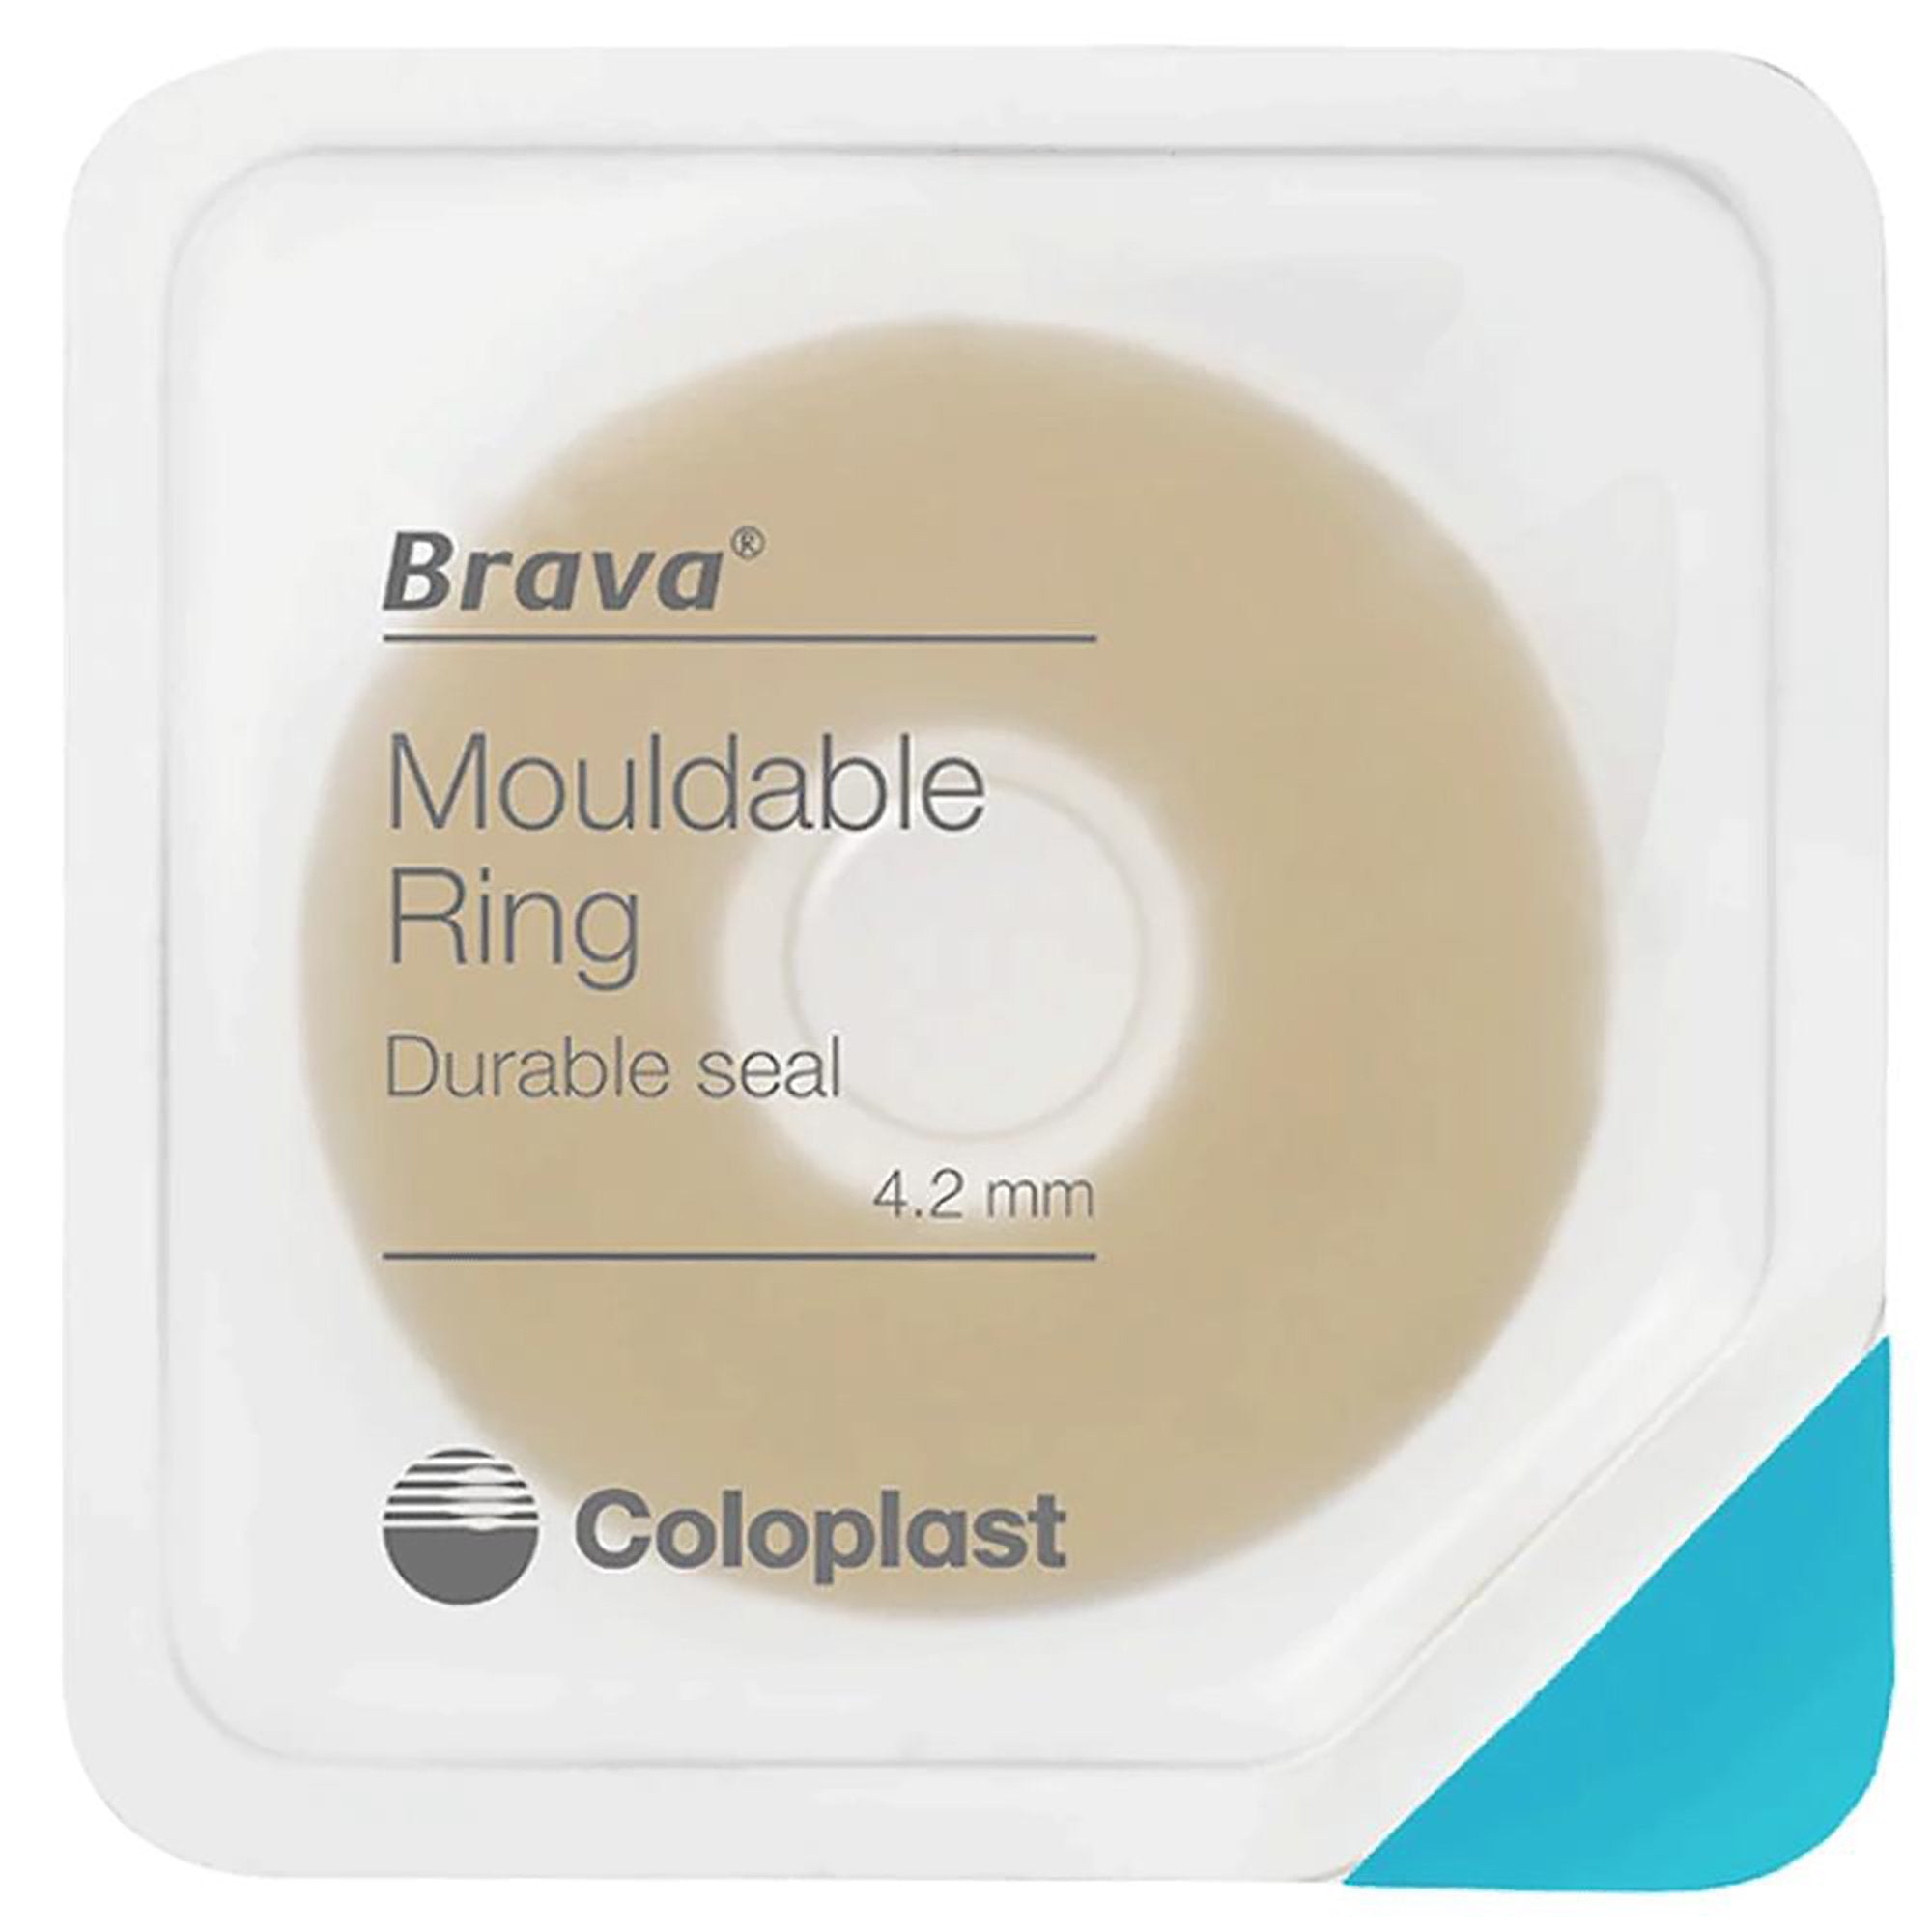 Coloplast Brava Ostomy Ring, Moldable, Durable, Alcohol-Free, 4.2